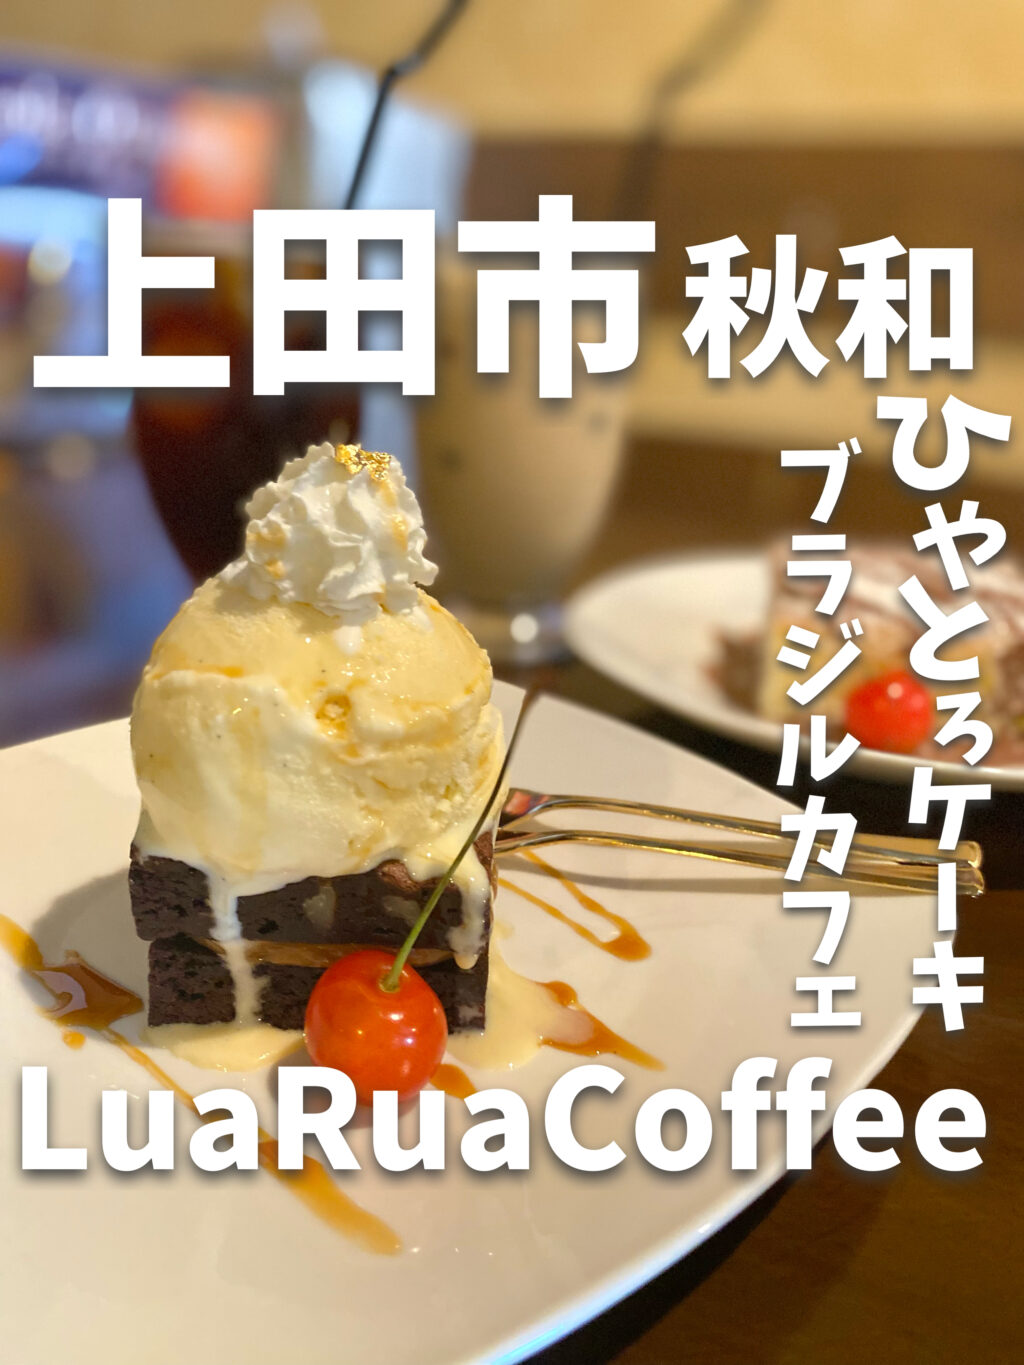 LuaRuaCoffee (ルアフアコーヒー)